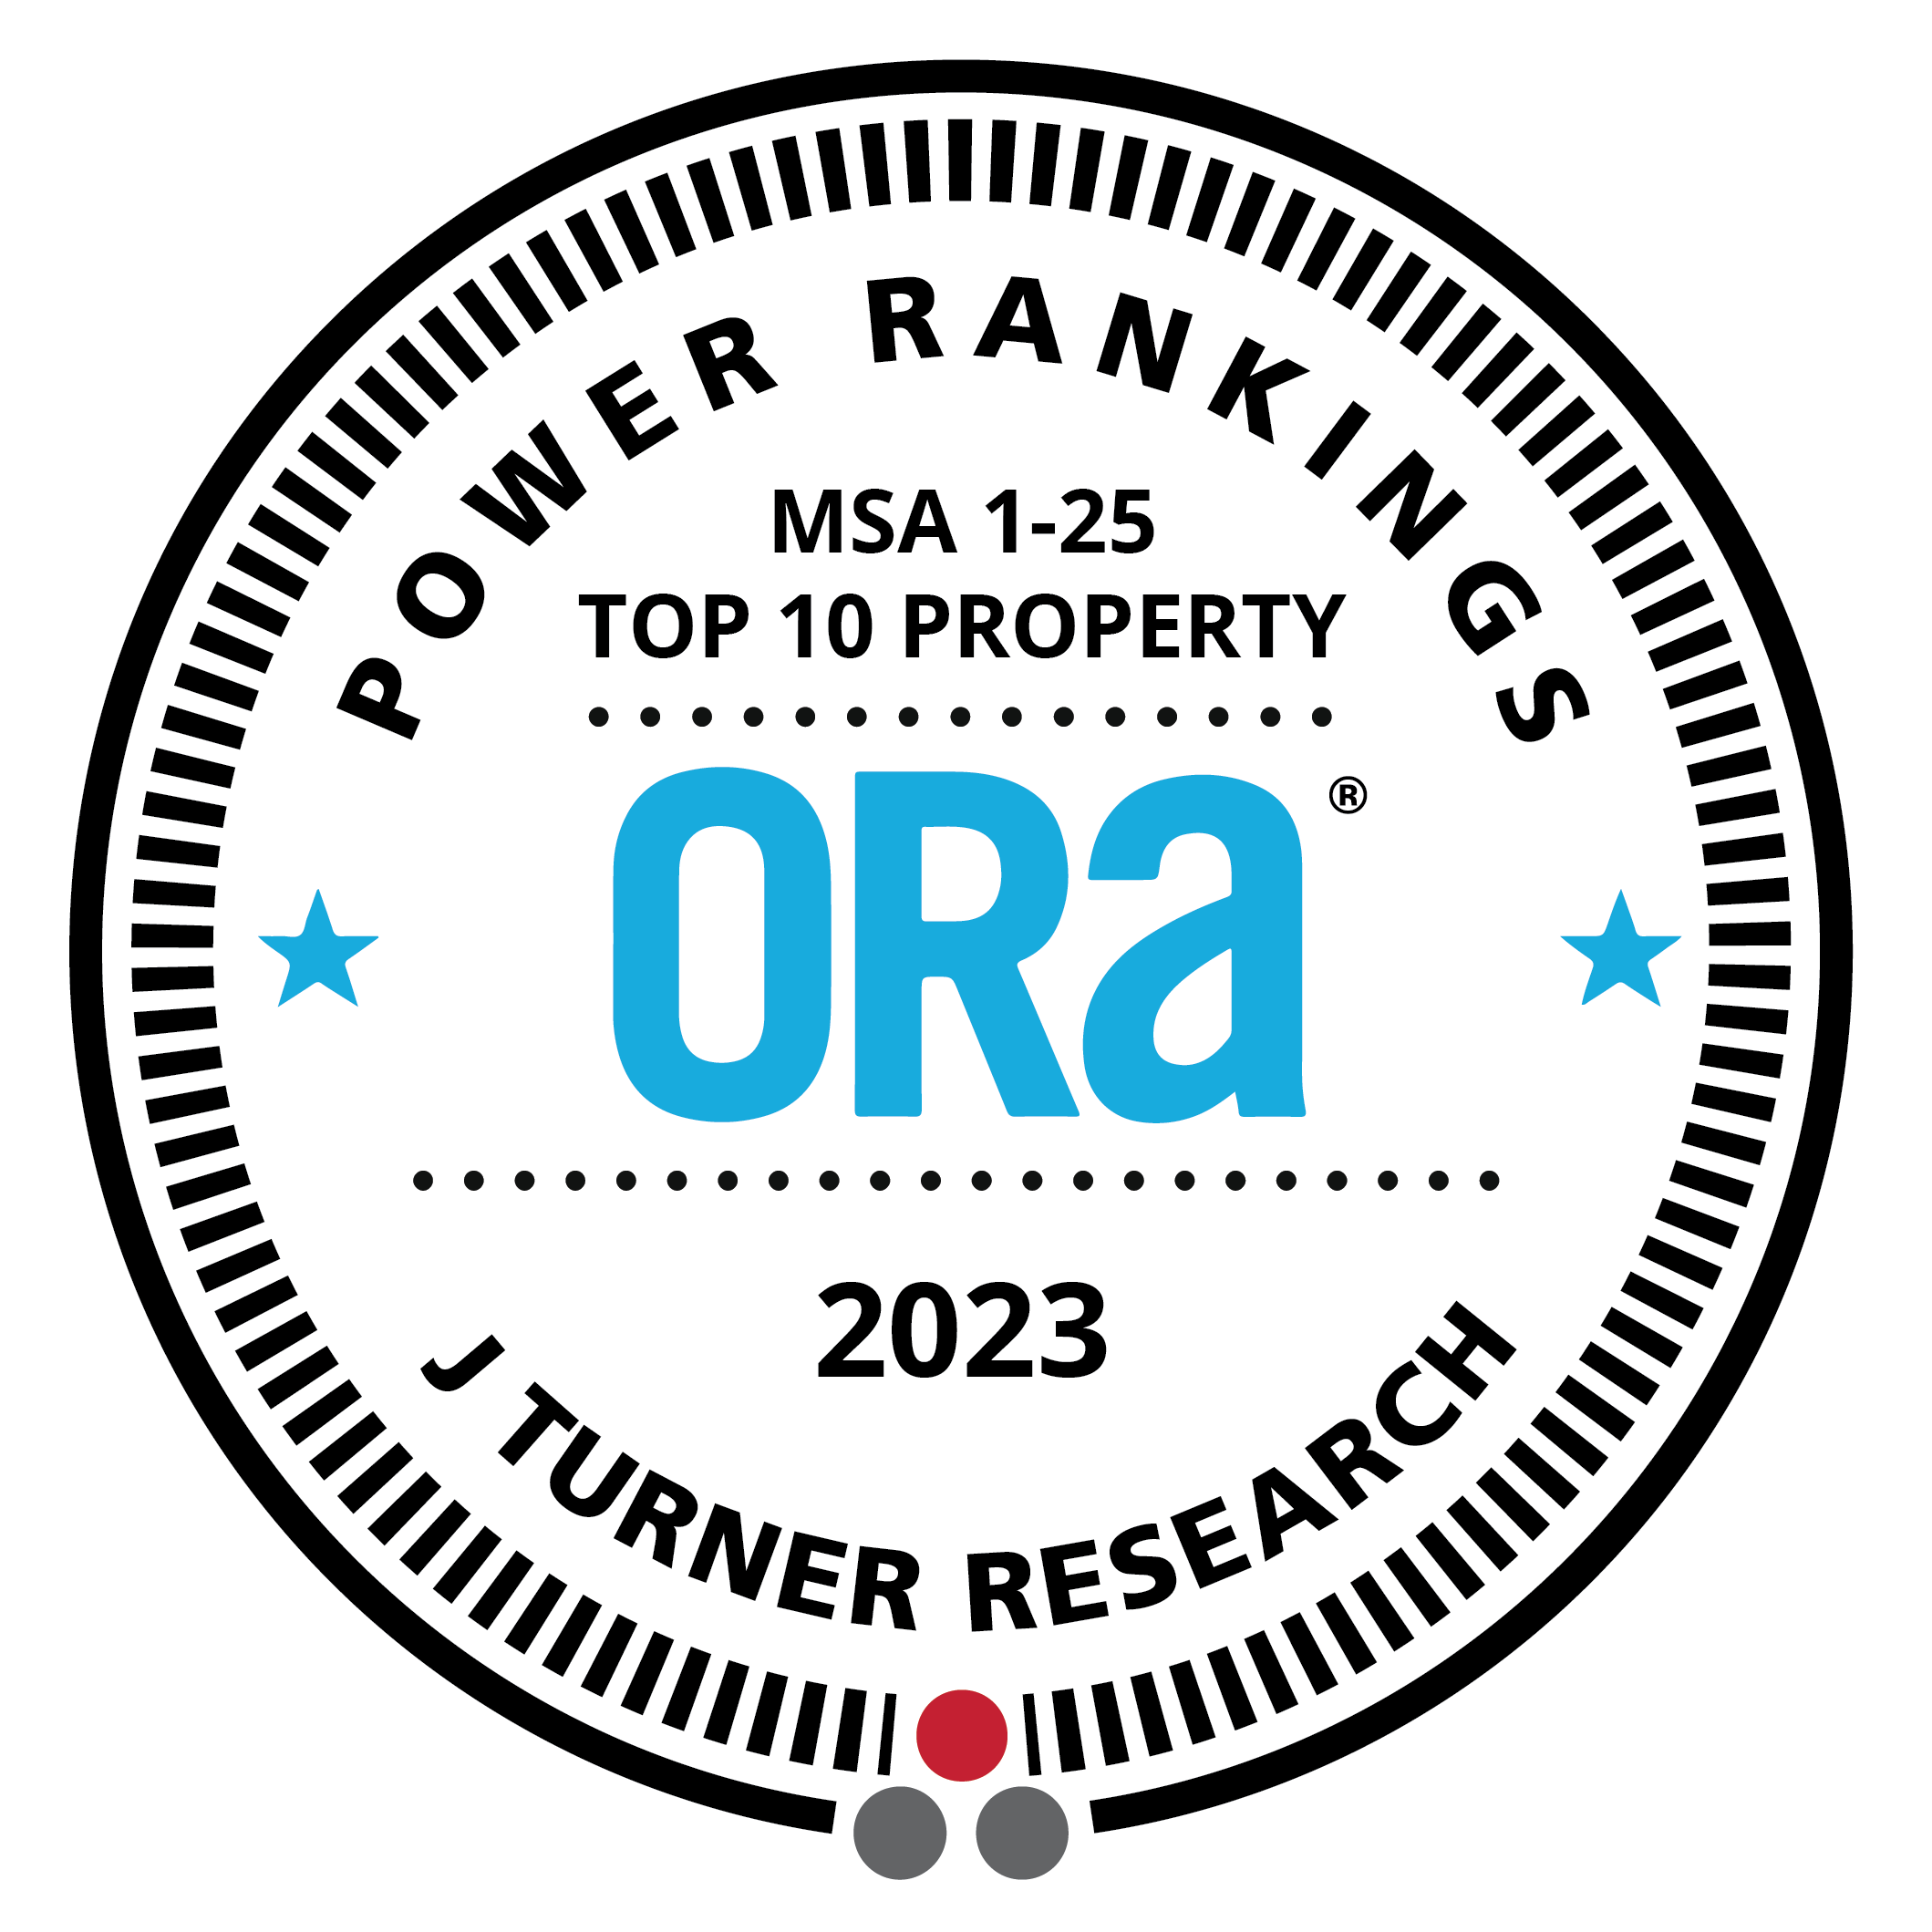 J Turner Research MSA 1-25 Top 10 Property